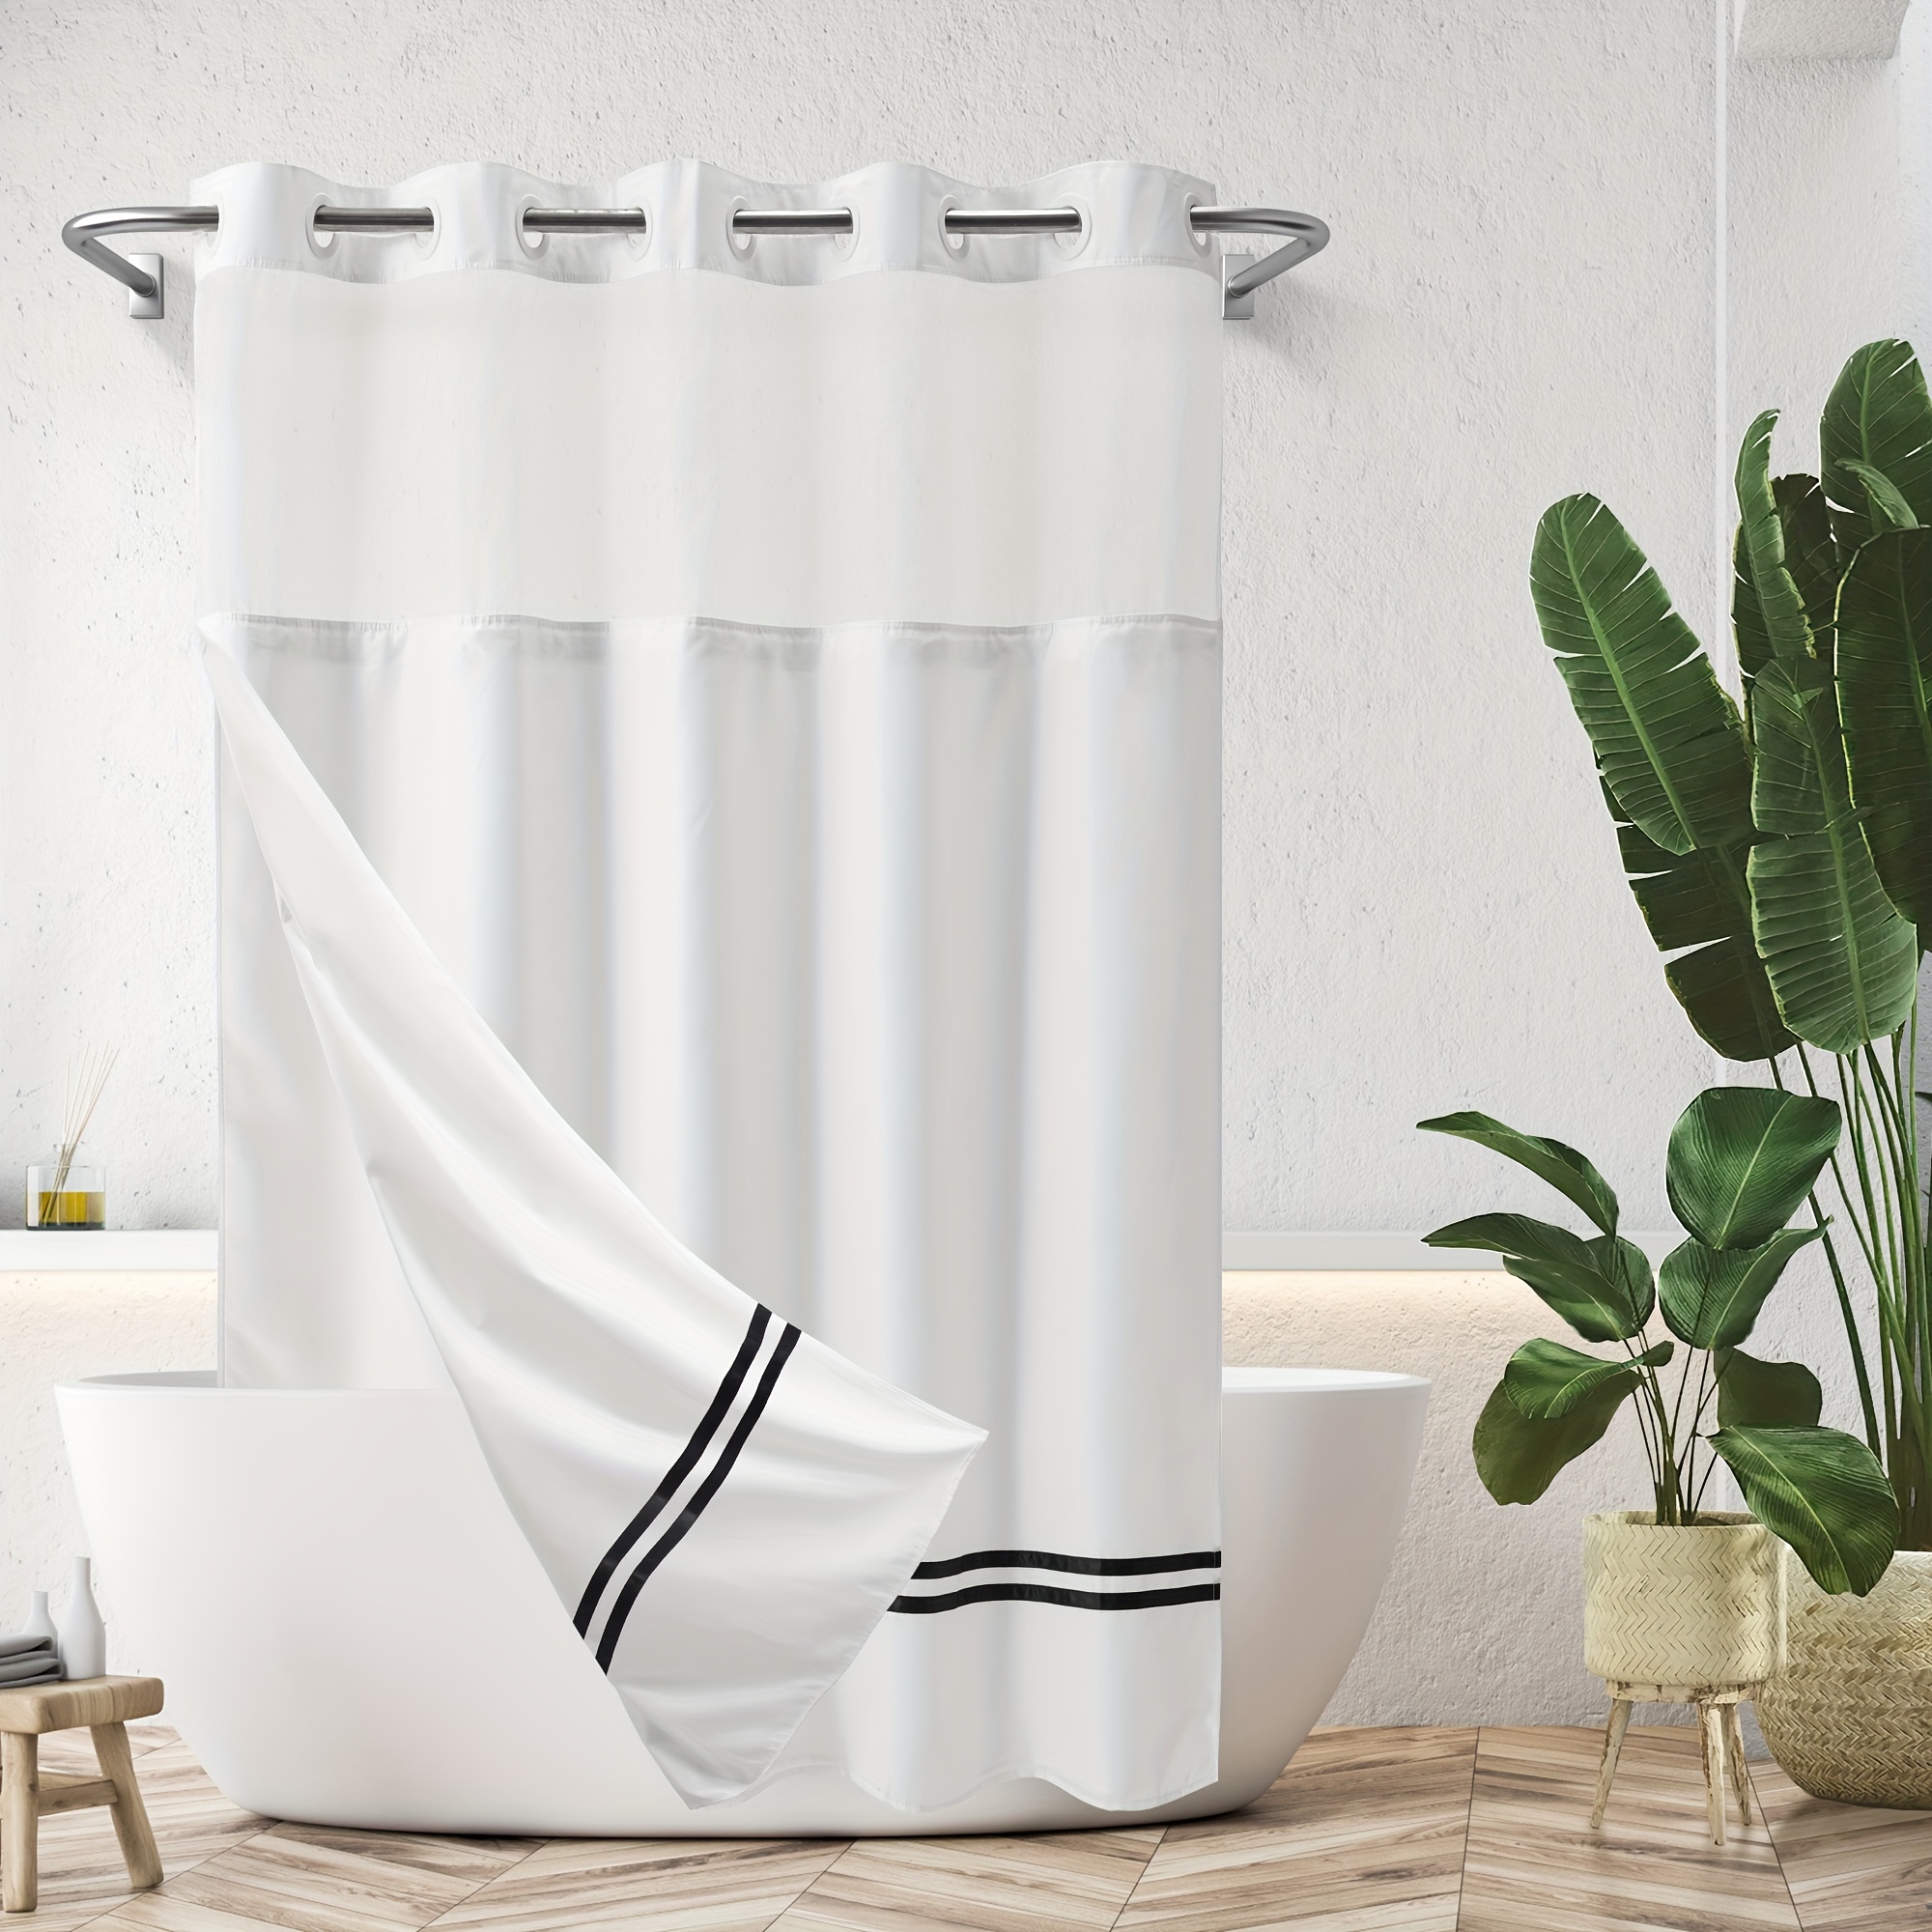 Cortina de ducha transparente para decoración del hogar, cortina de baño  con bolsillos de malla, para bañeras, duchas, decoración del hogar. Color